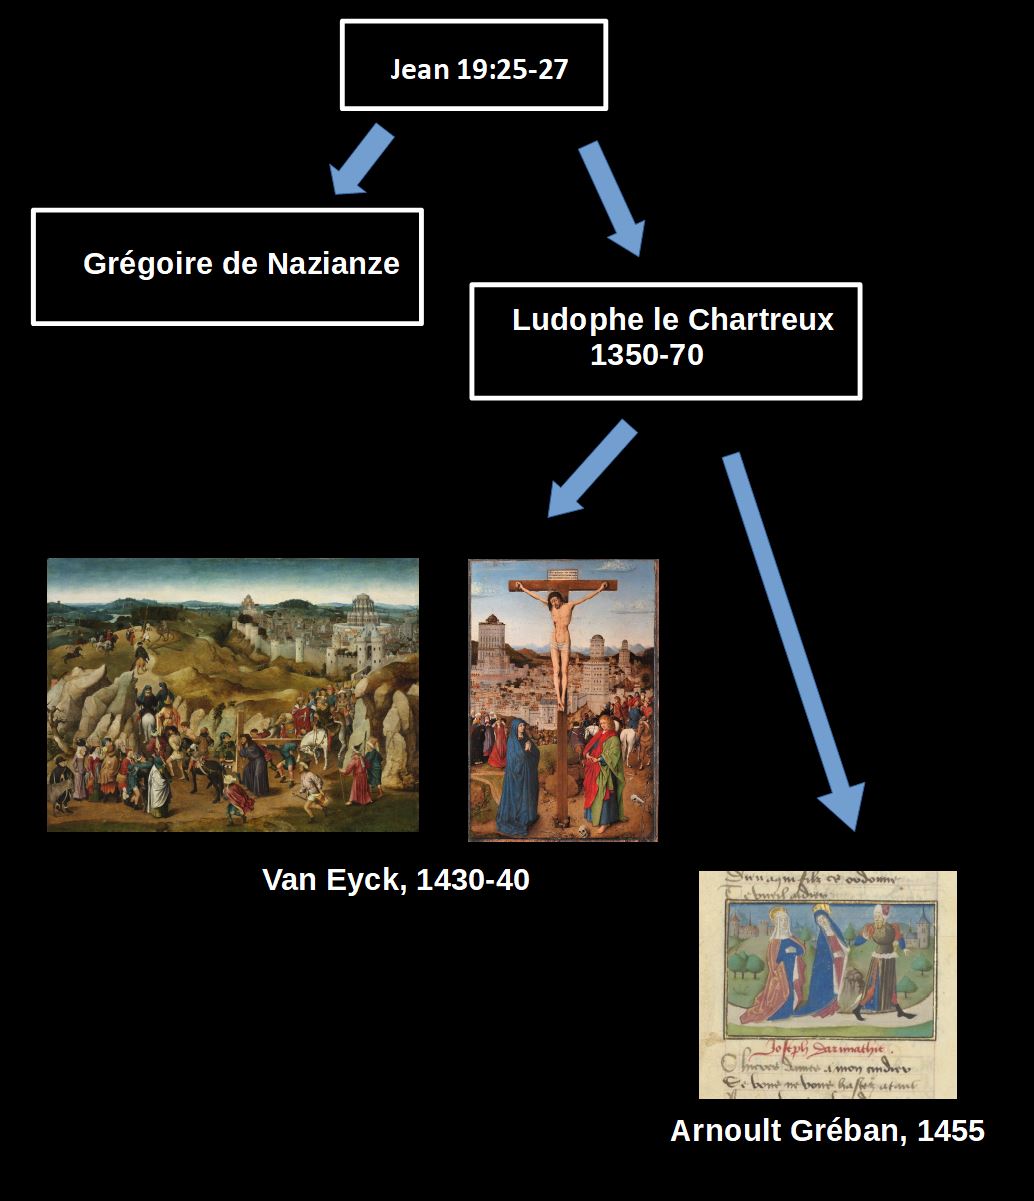 Van Eyck atelier 1440-50 Crucifixion Ca d'oro Venise schema chrono